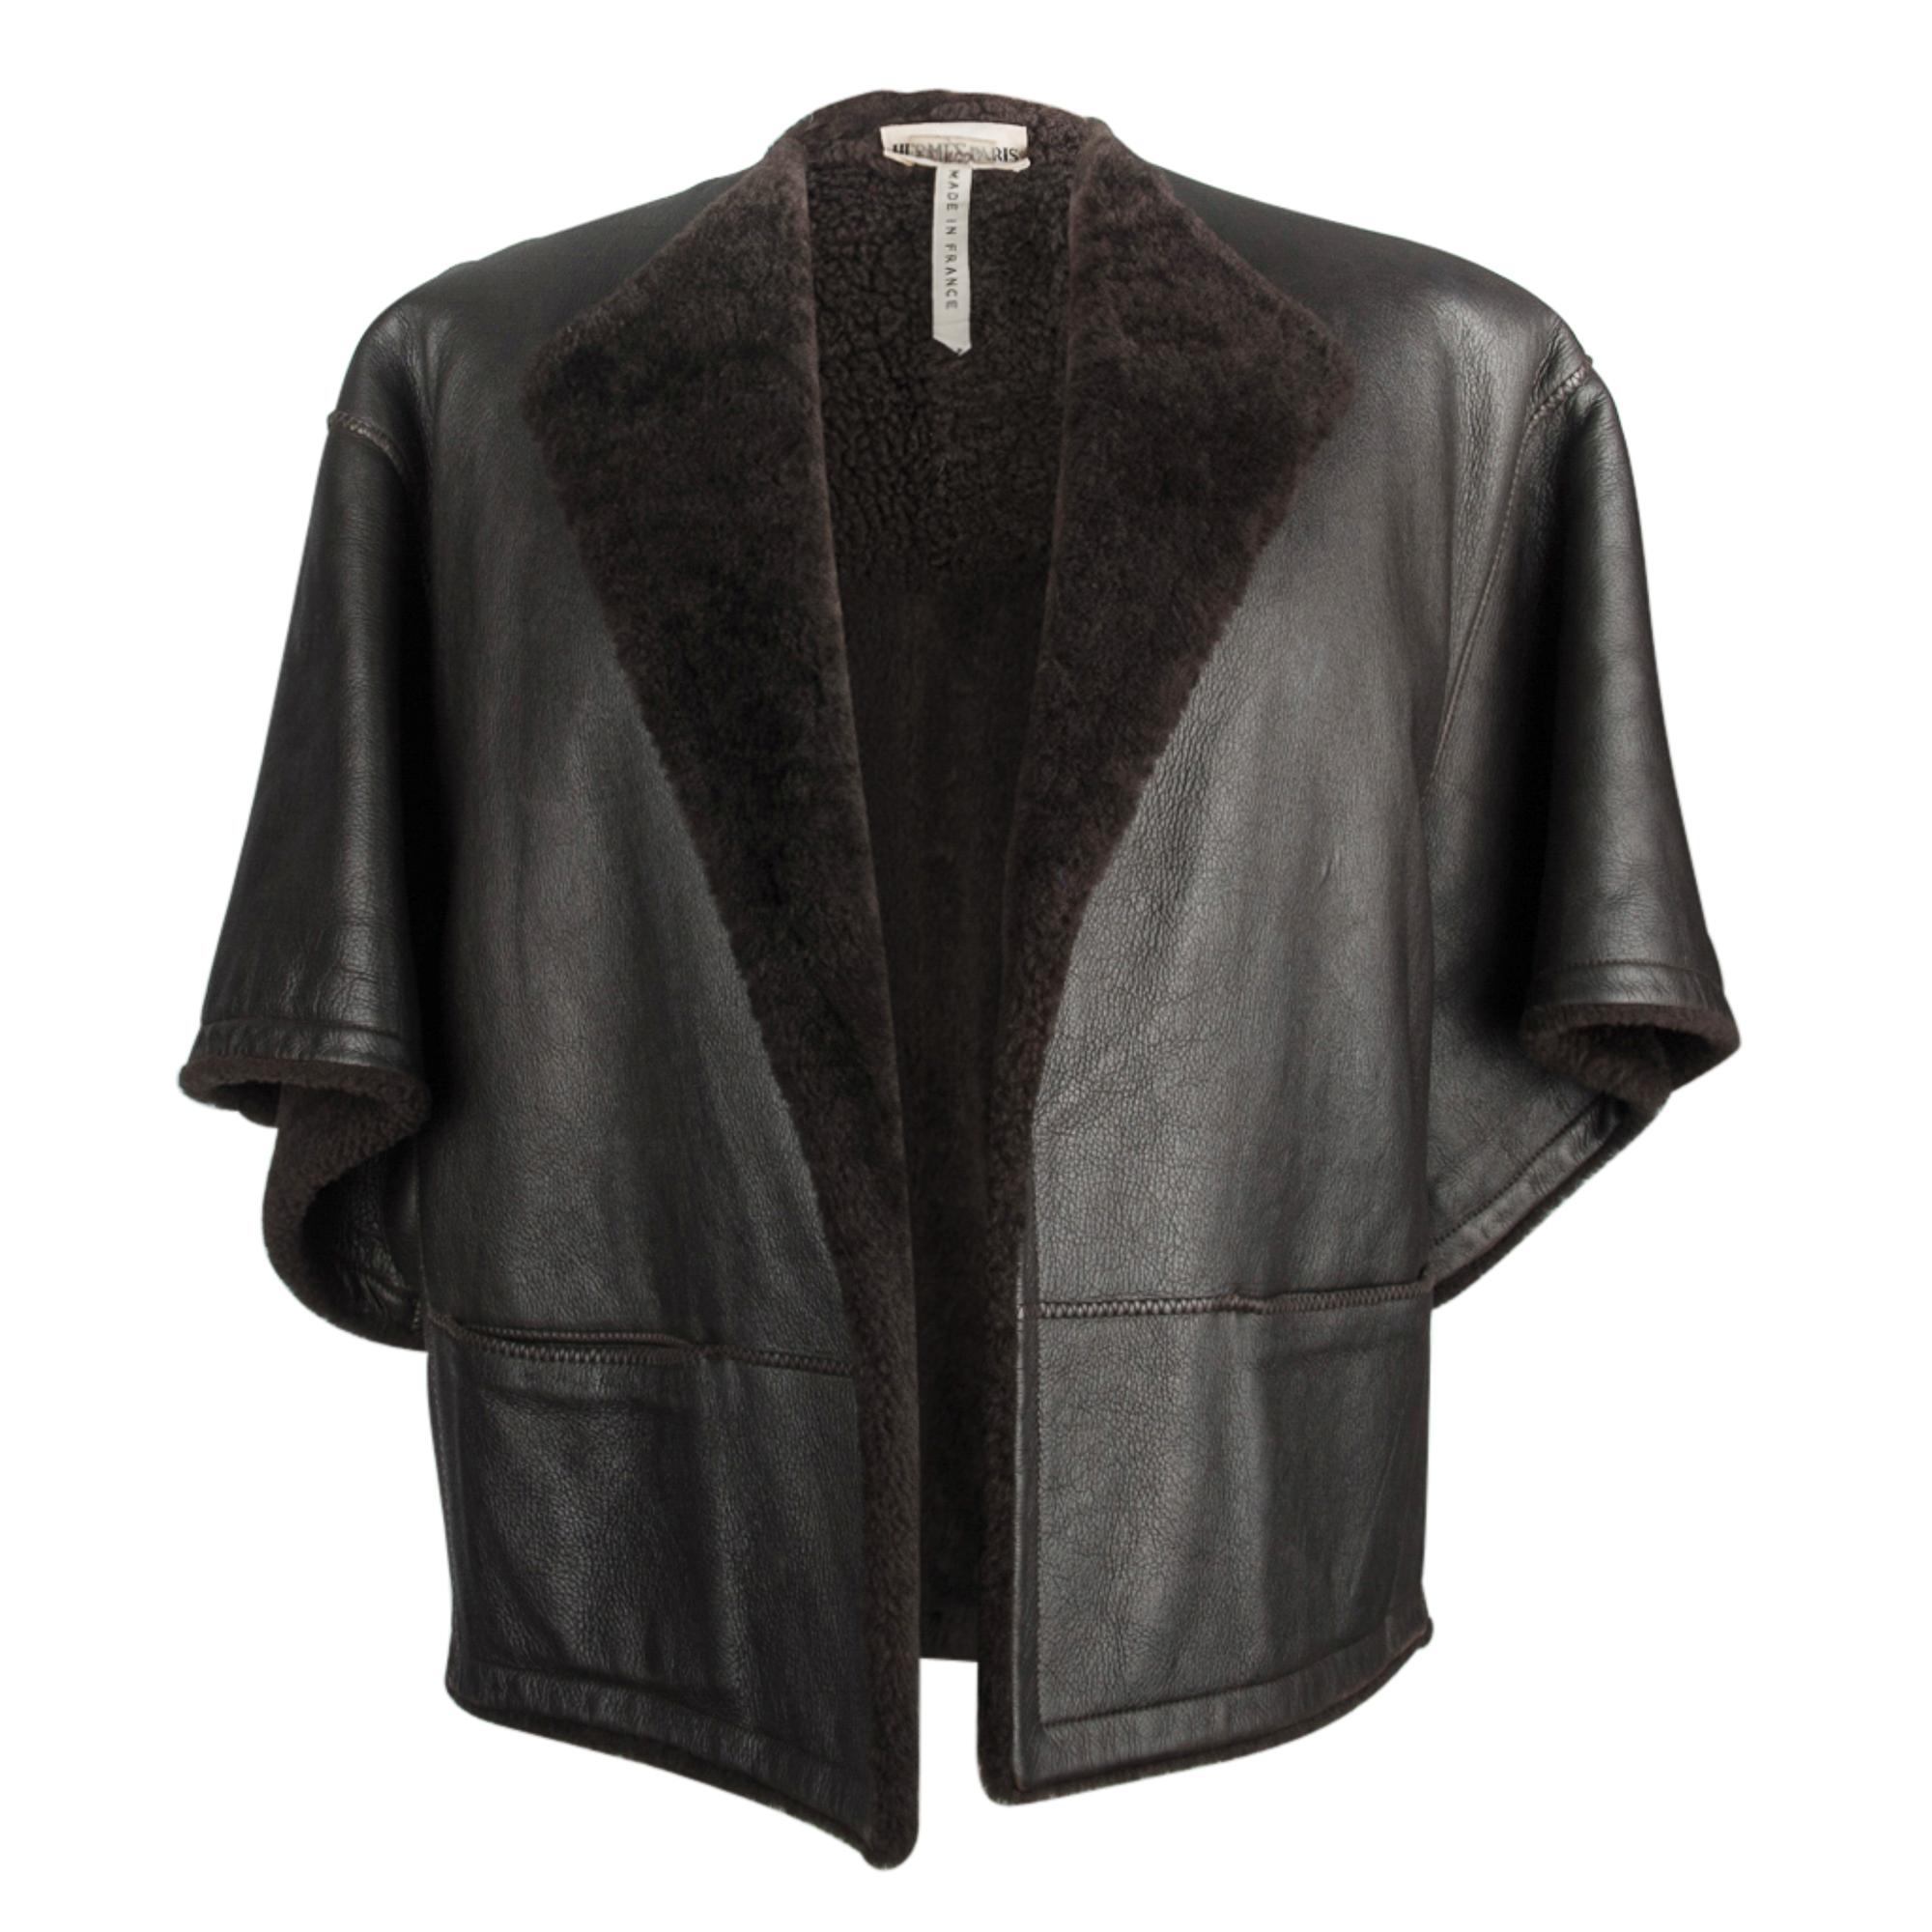 Hermes Shearling Capelet Jacket Dark Brown 3/4 Sleeve 38 / 4 to 6  Striking  For Sale 4